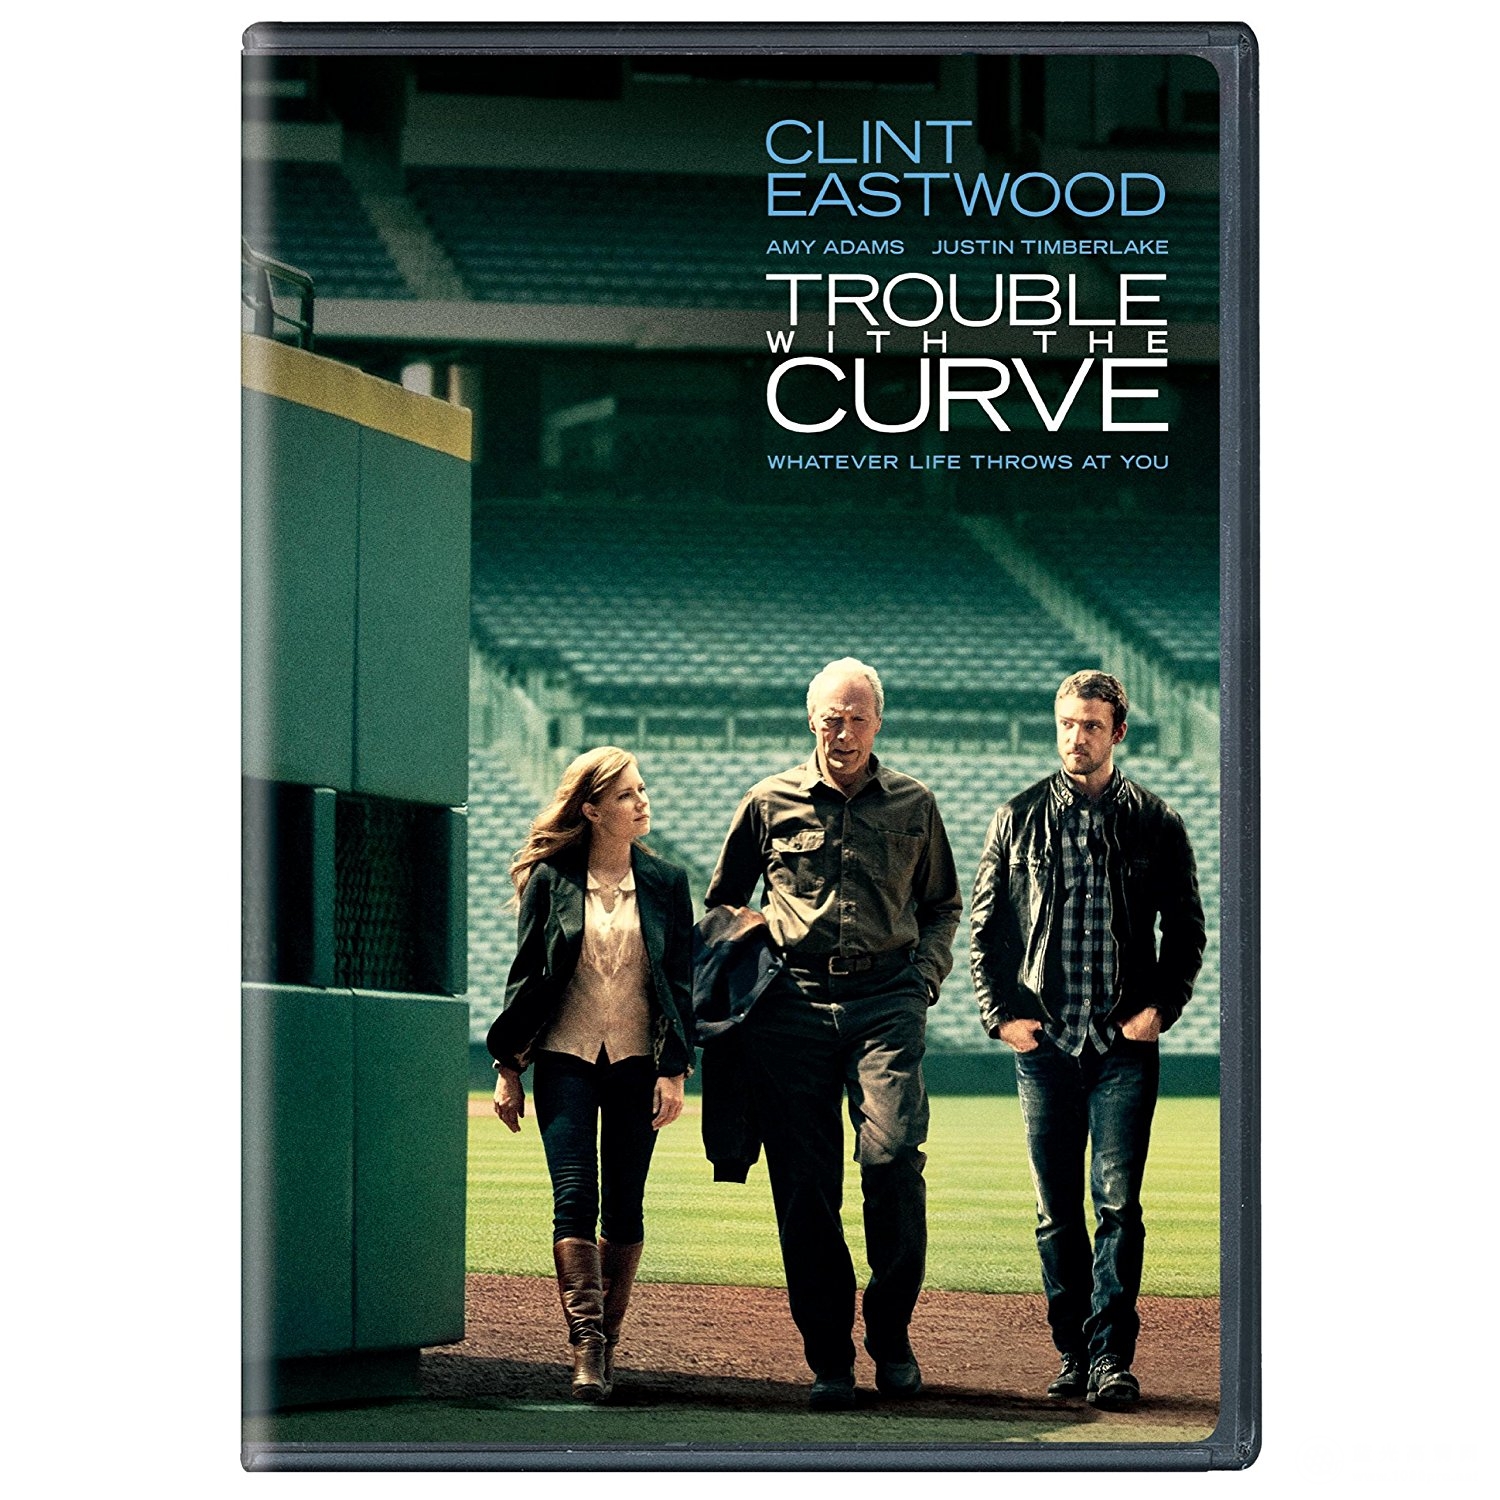 曲线难题/人生决胜球 Trouble with the Curve 2012 720p BluRay x264-SPARKS 4.37G-1.jpg